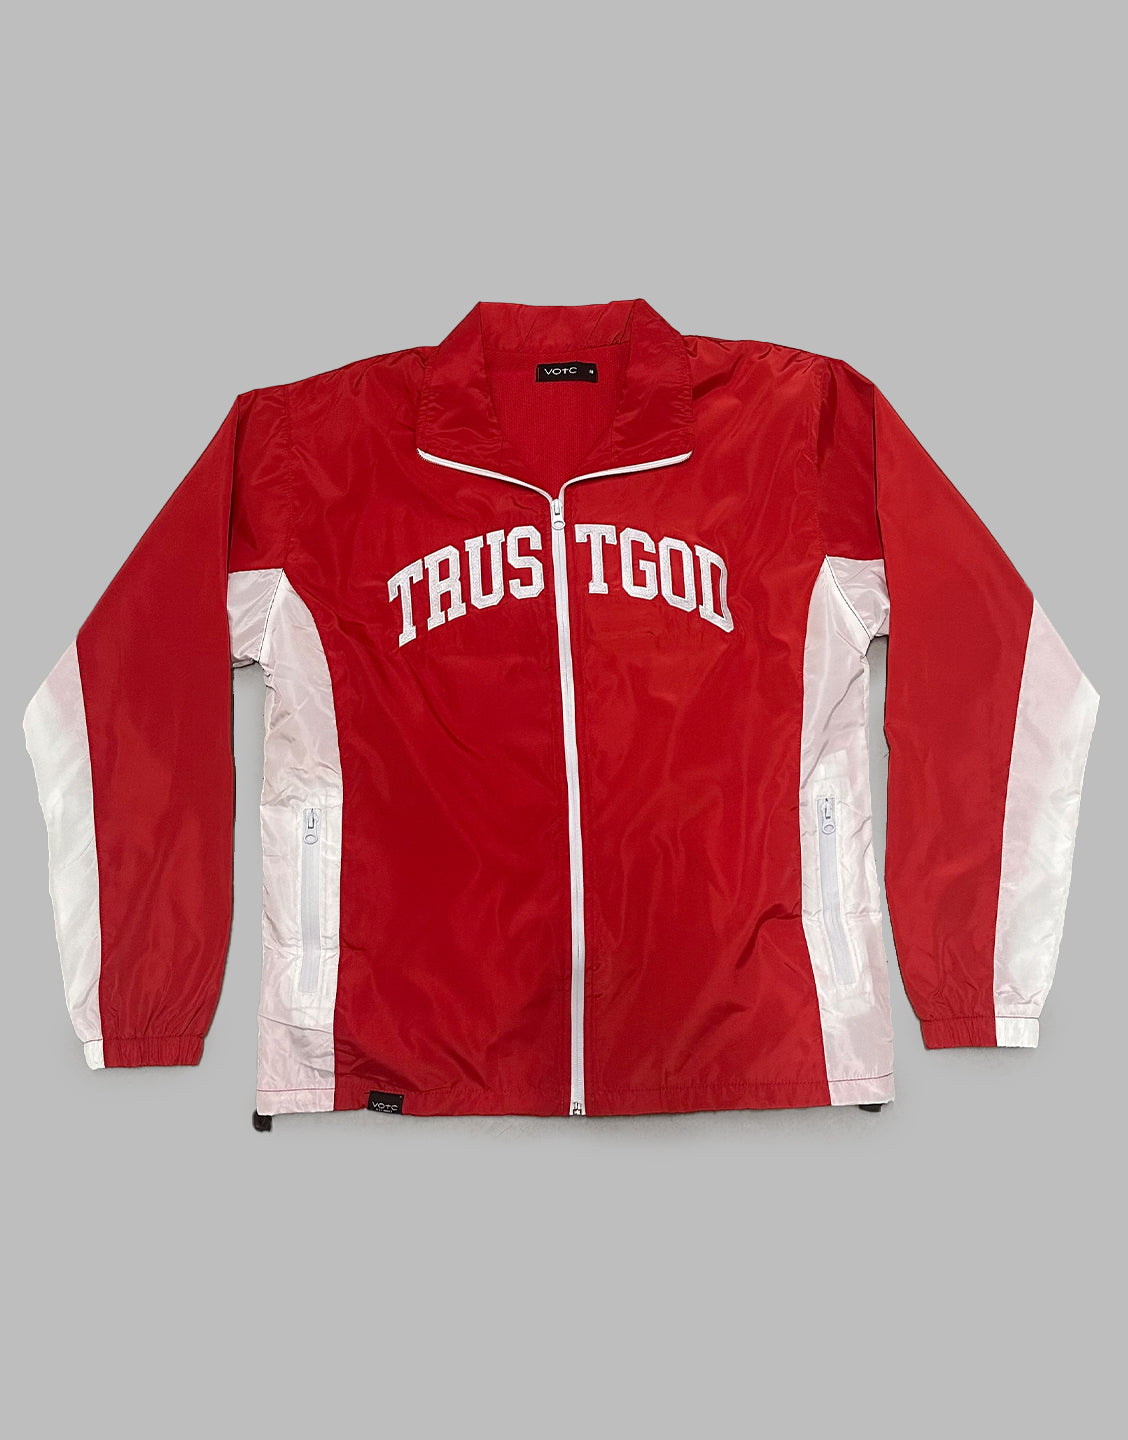 Trust God Windbreaker Zip-Up Jacket - Red - VOTC Clothing